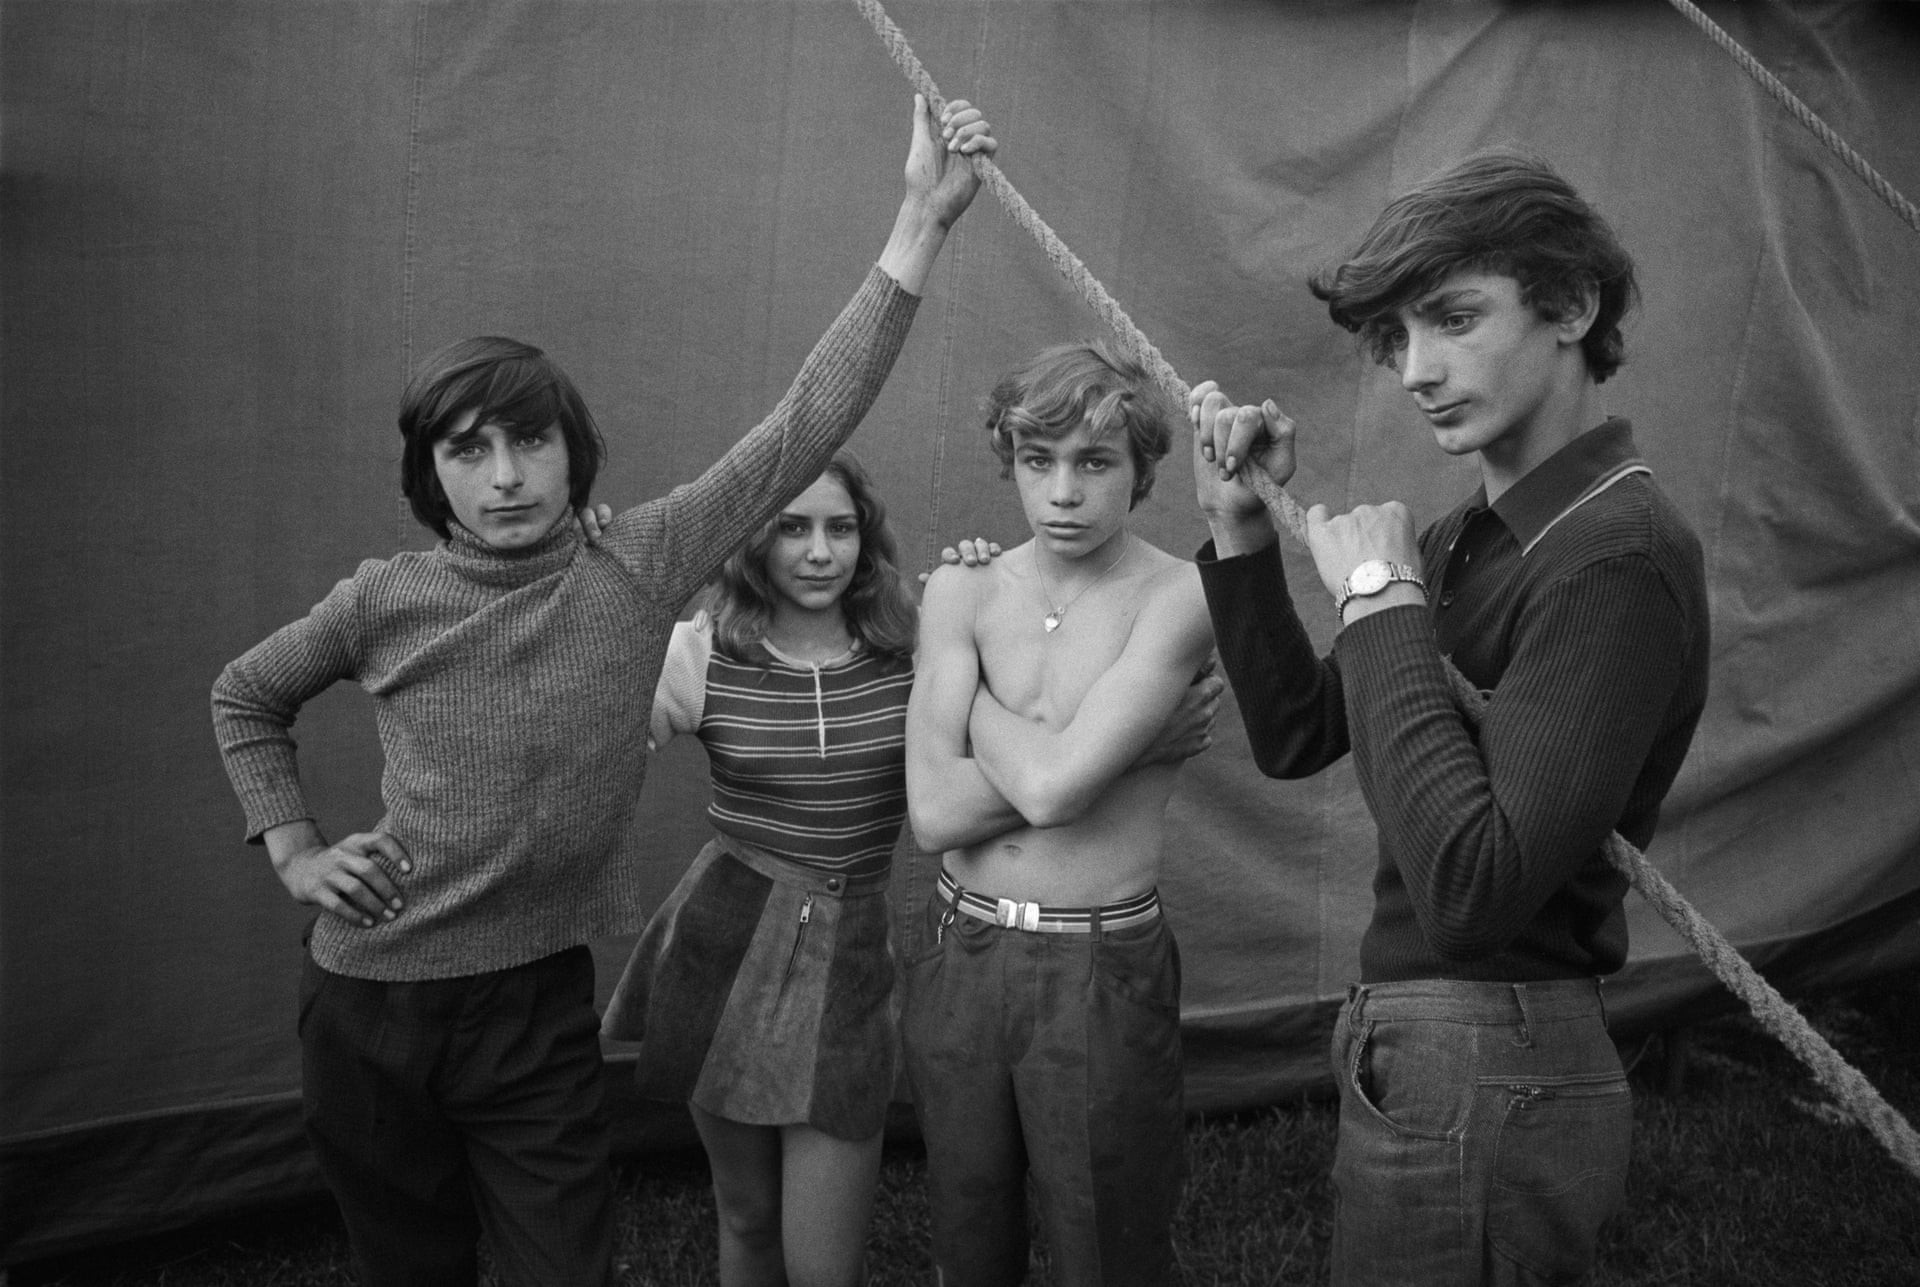 Цирк, 1973. Фотограф Уте Малер